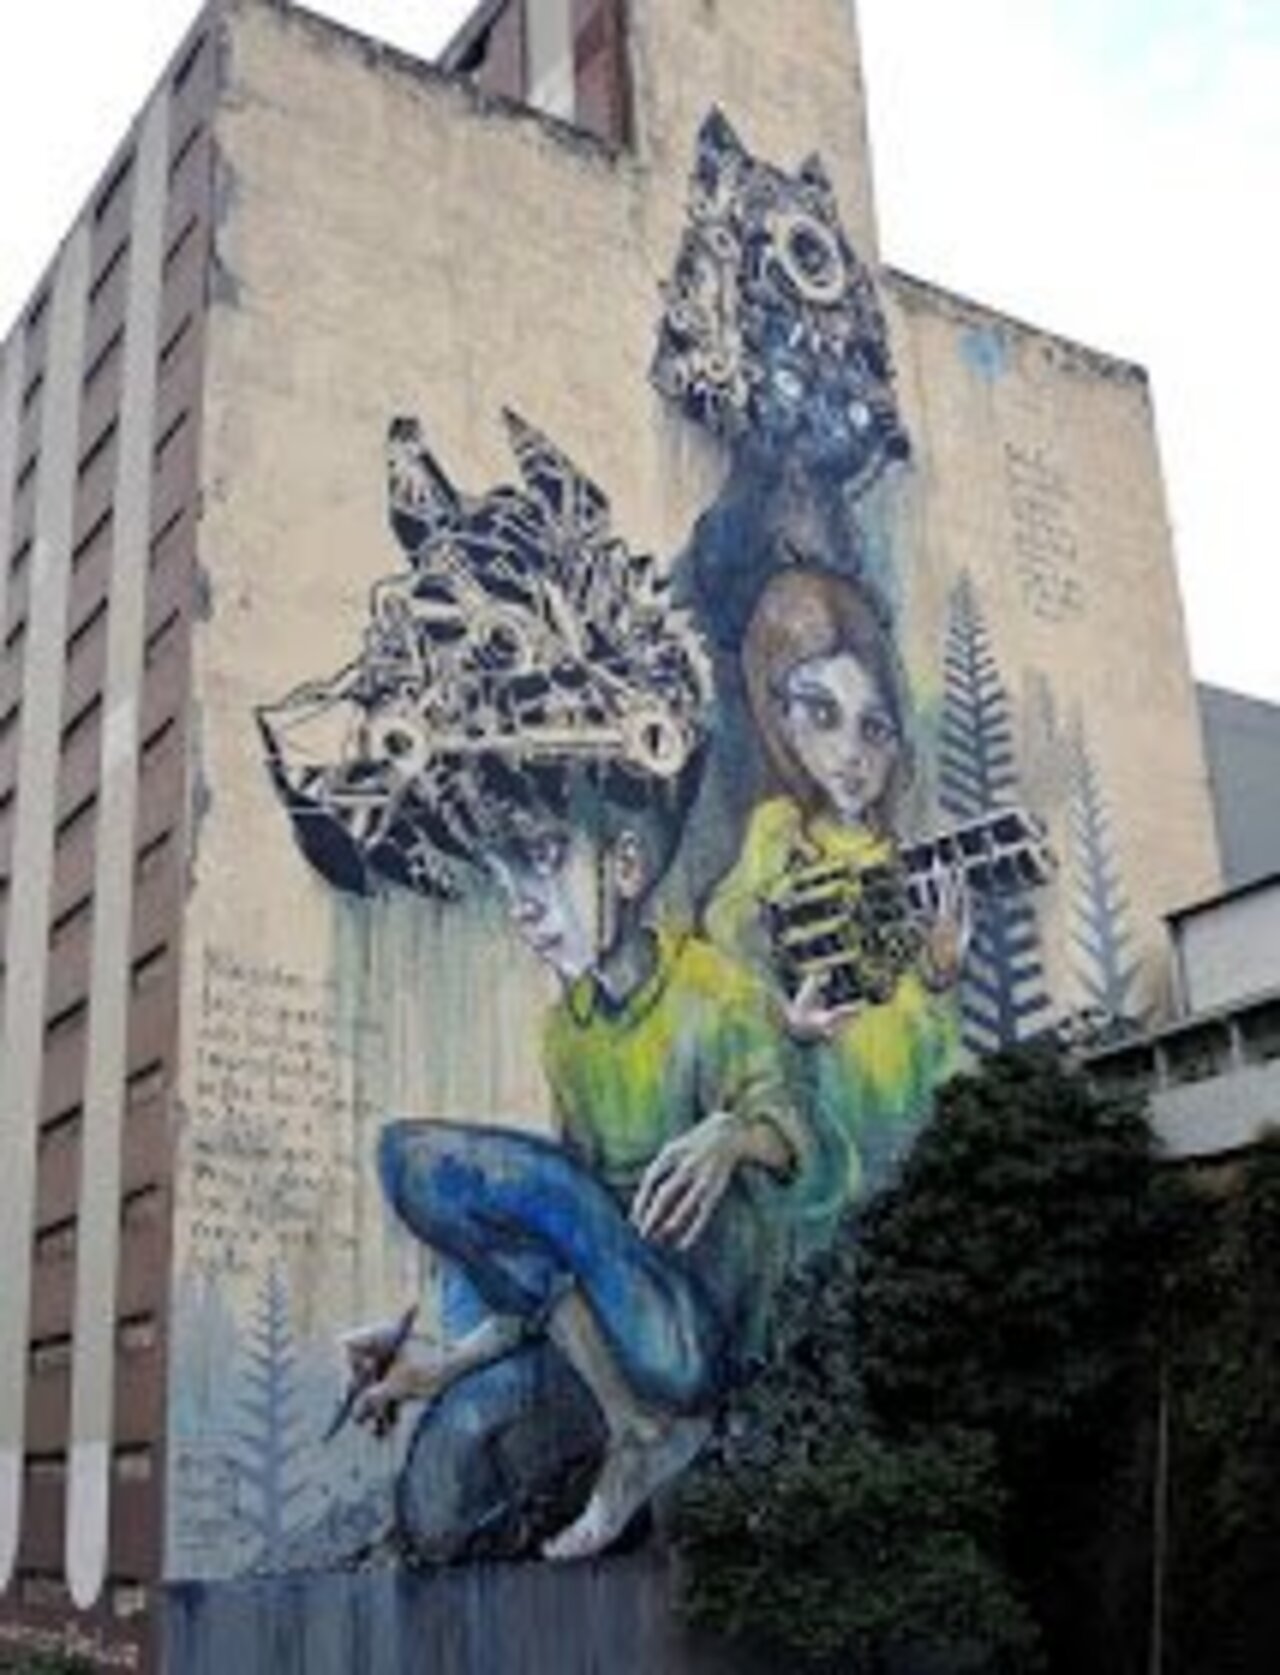 RT @AuKeats: #Herakut & #M-City #streetart #mural in #SaoPaulo #Brazil #switch #bedifferent #graffiti #arte #art https://t.co/ONekkyrk9l